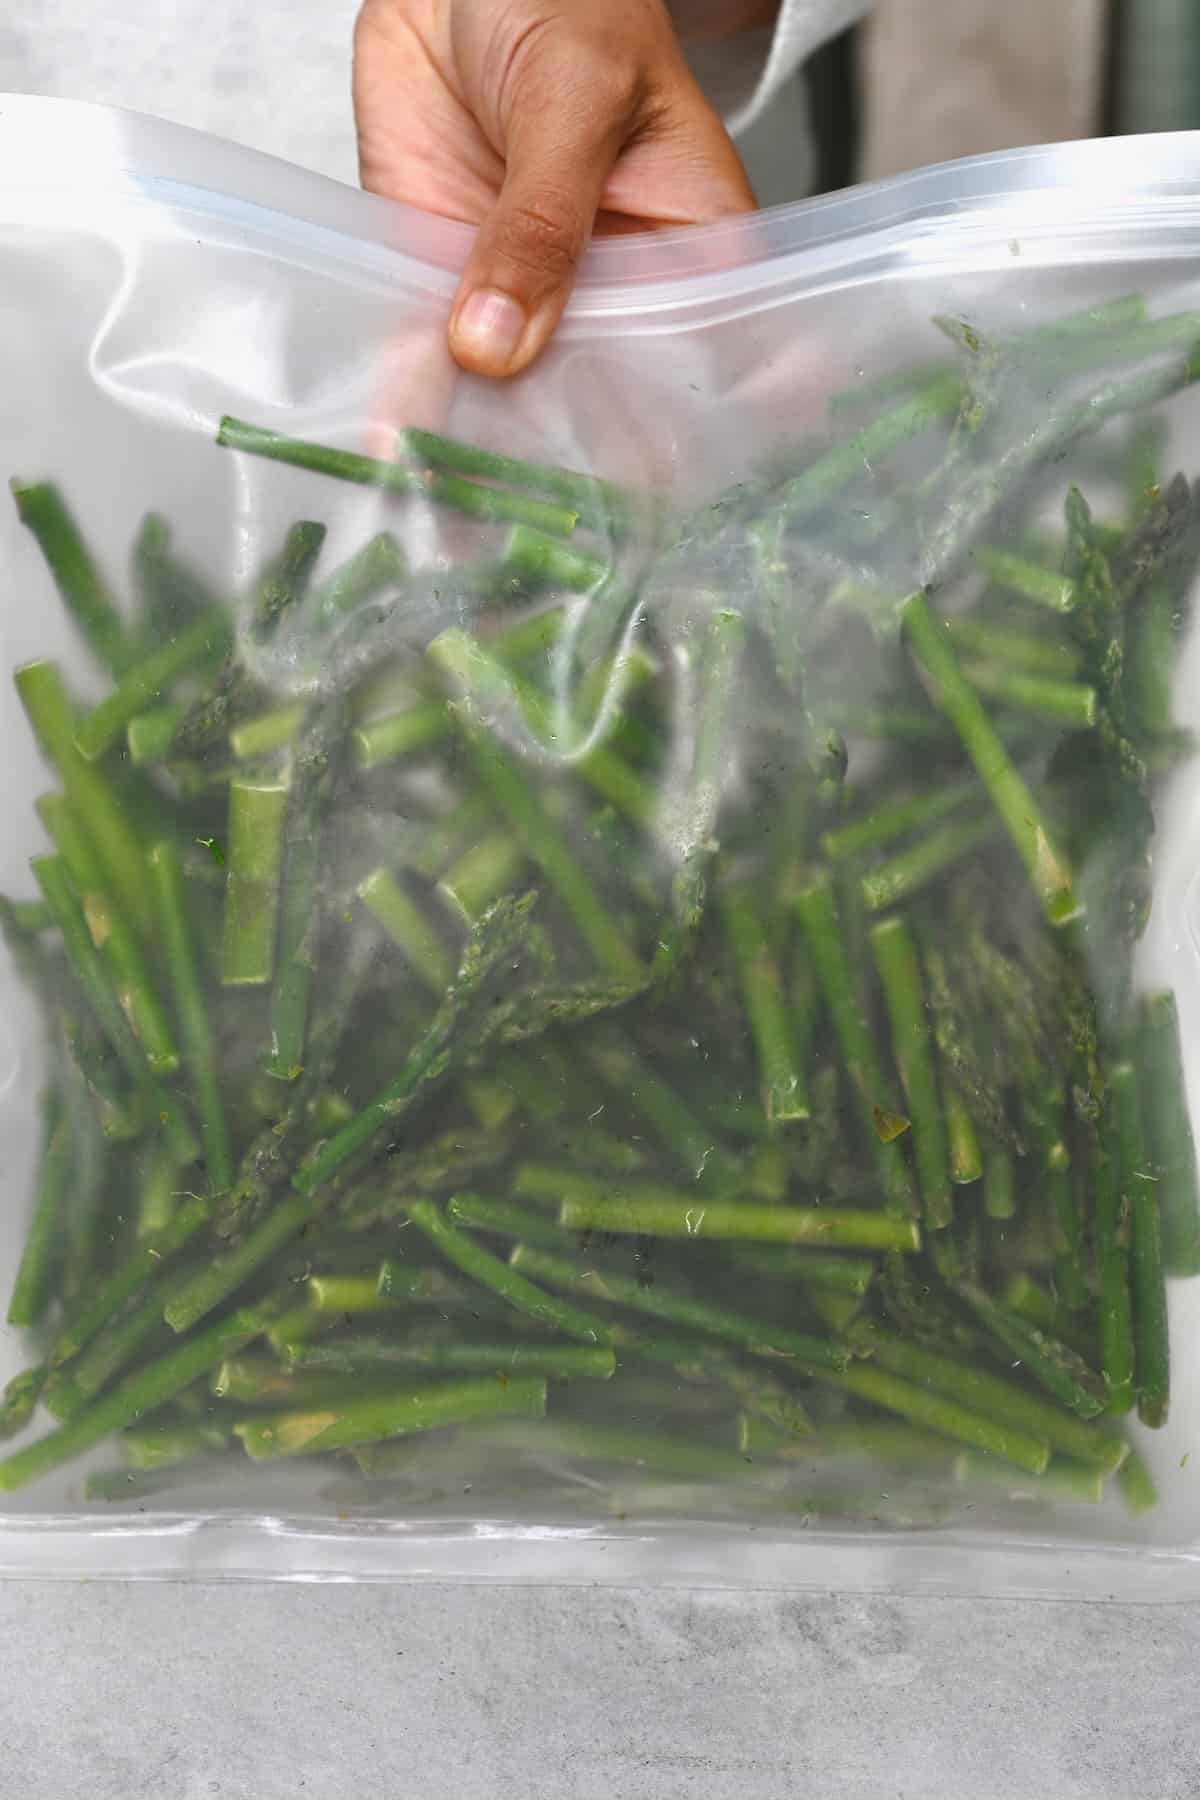 Frozen asparagus in a bag